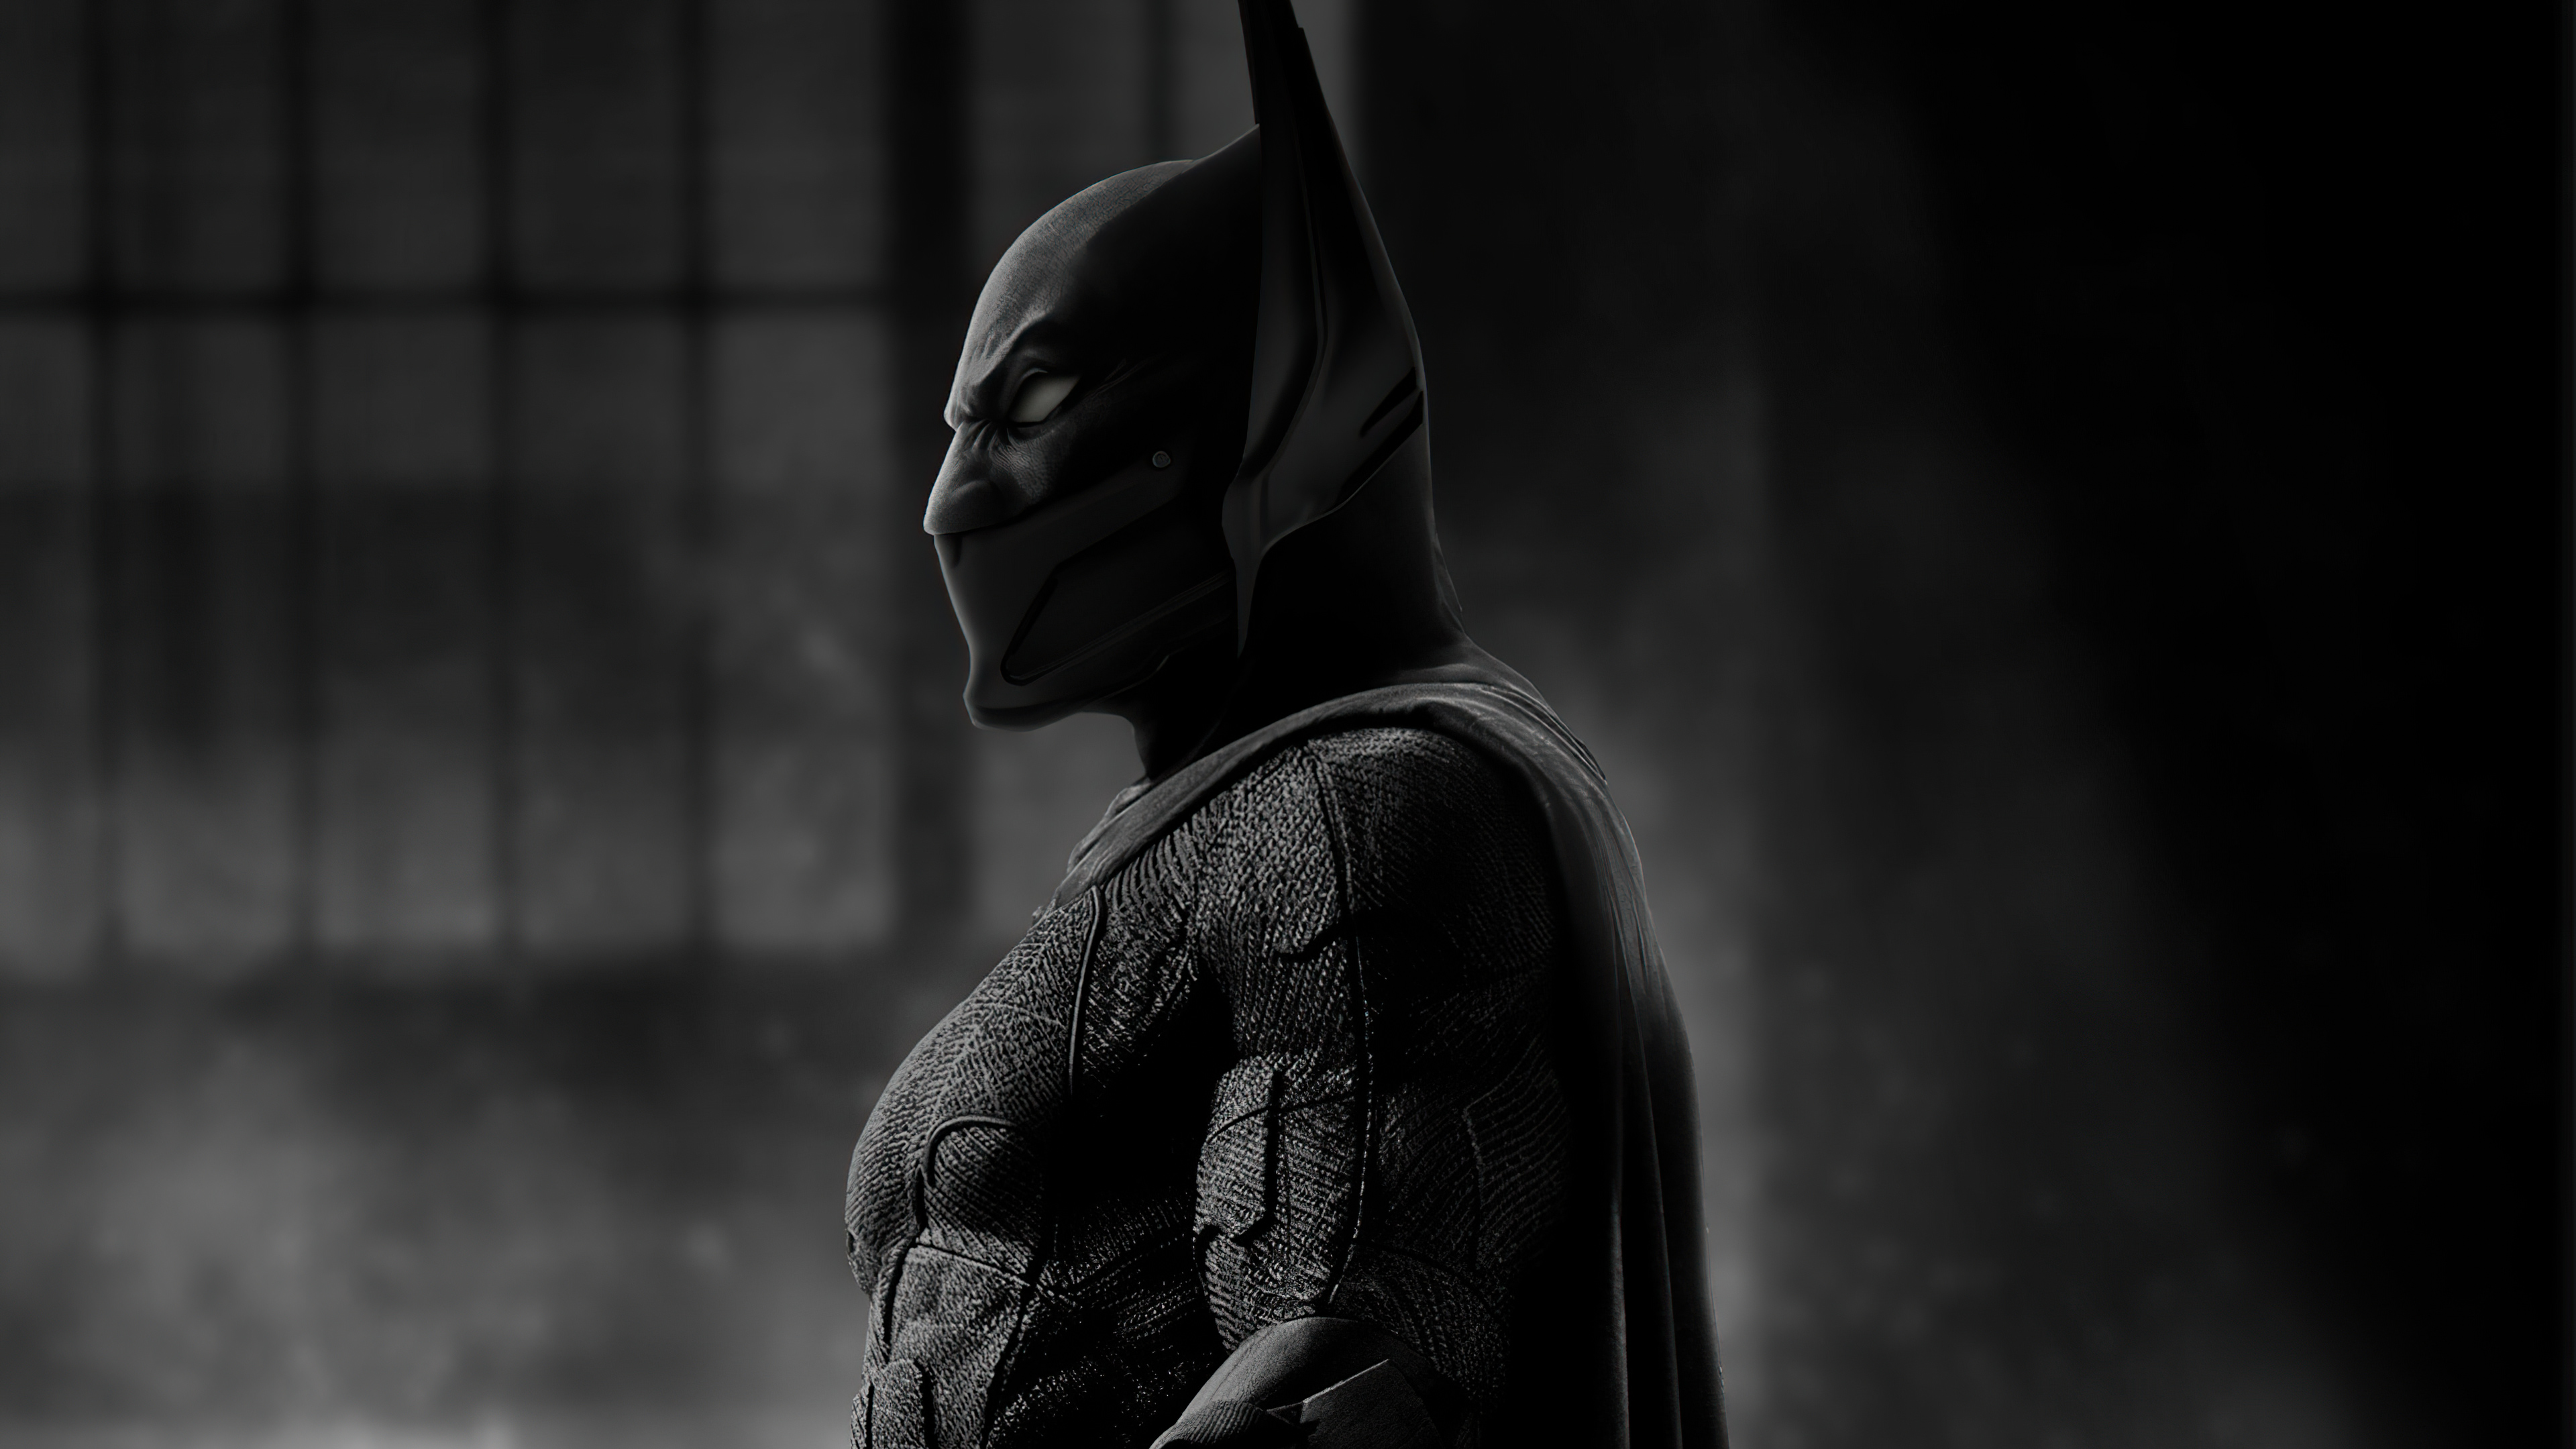 Batman Dark Knight Hero, HD Superheroes, 4k Wallpaper, Image, Background, Photo and Picture